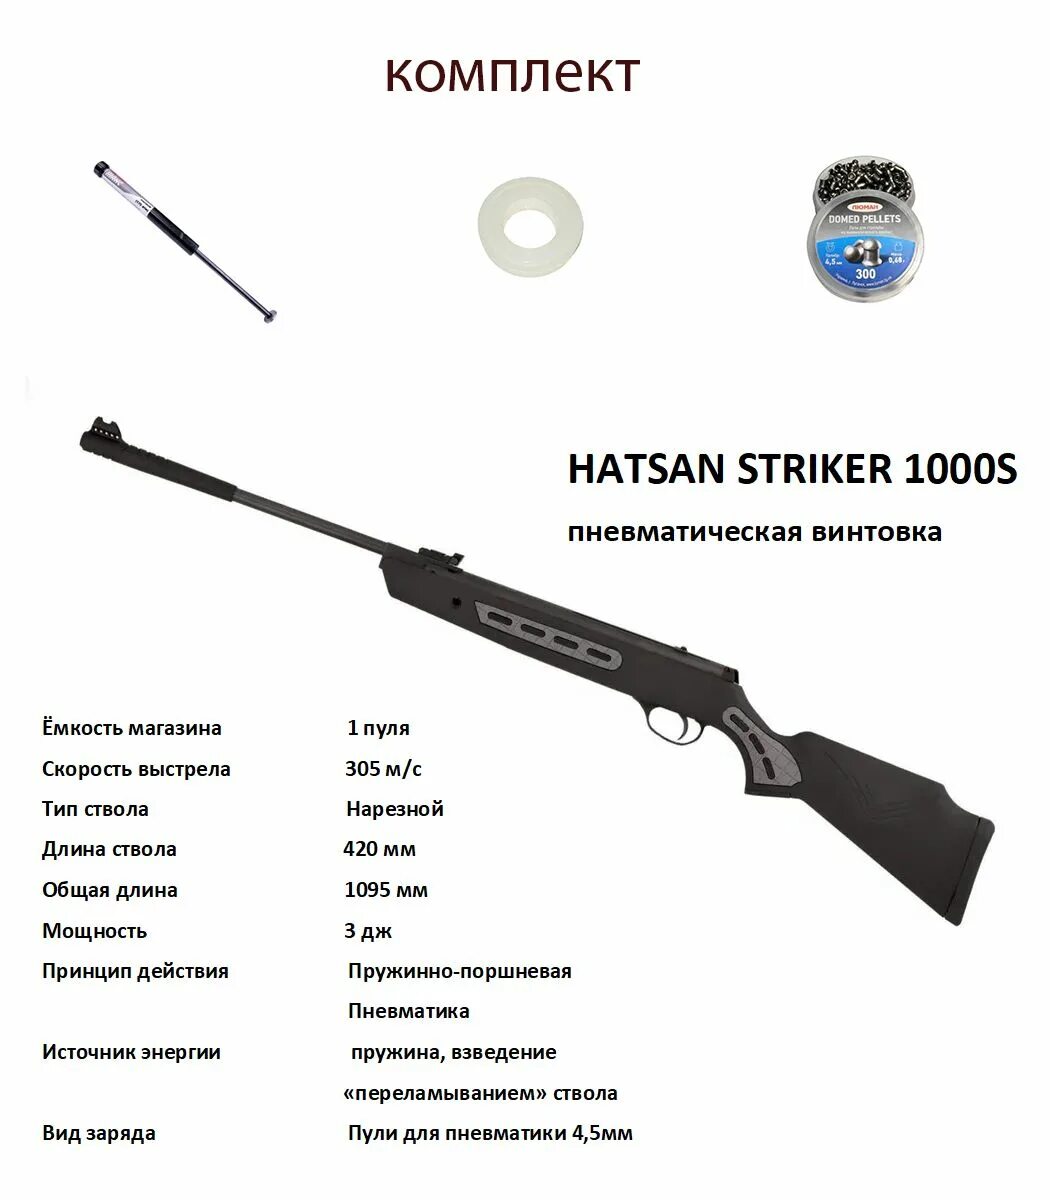 Пневматическая винтовка Hatsan Striker 1000s. Пневматическая винтовка Hatsan 1000 s характеристики. Хатсан Страйкер 1000. Пневматическая винтовка Хатсан Страйкер характеристики.